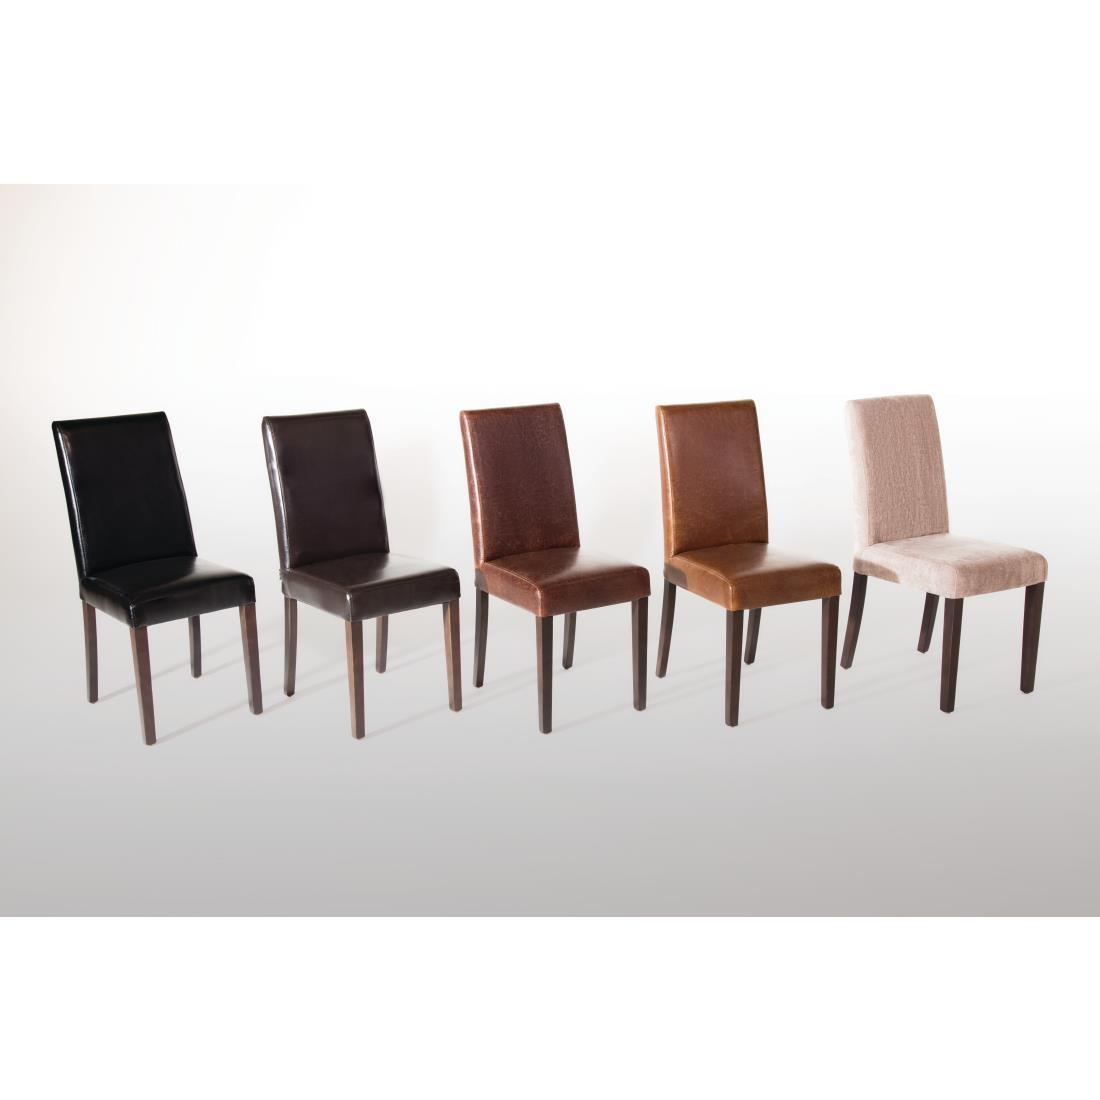 Bolero Faux Leather Dining Chair Dark Brown (Box 2) - GF955  - 7